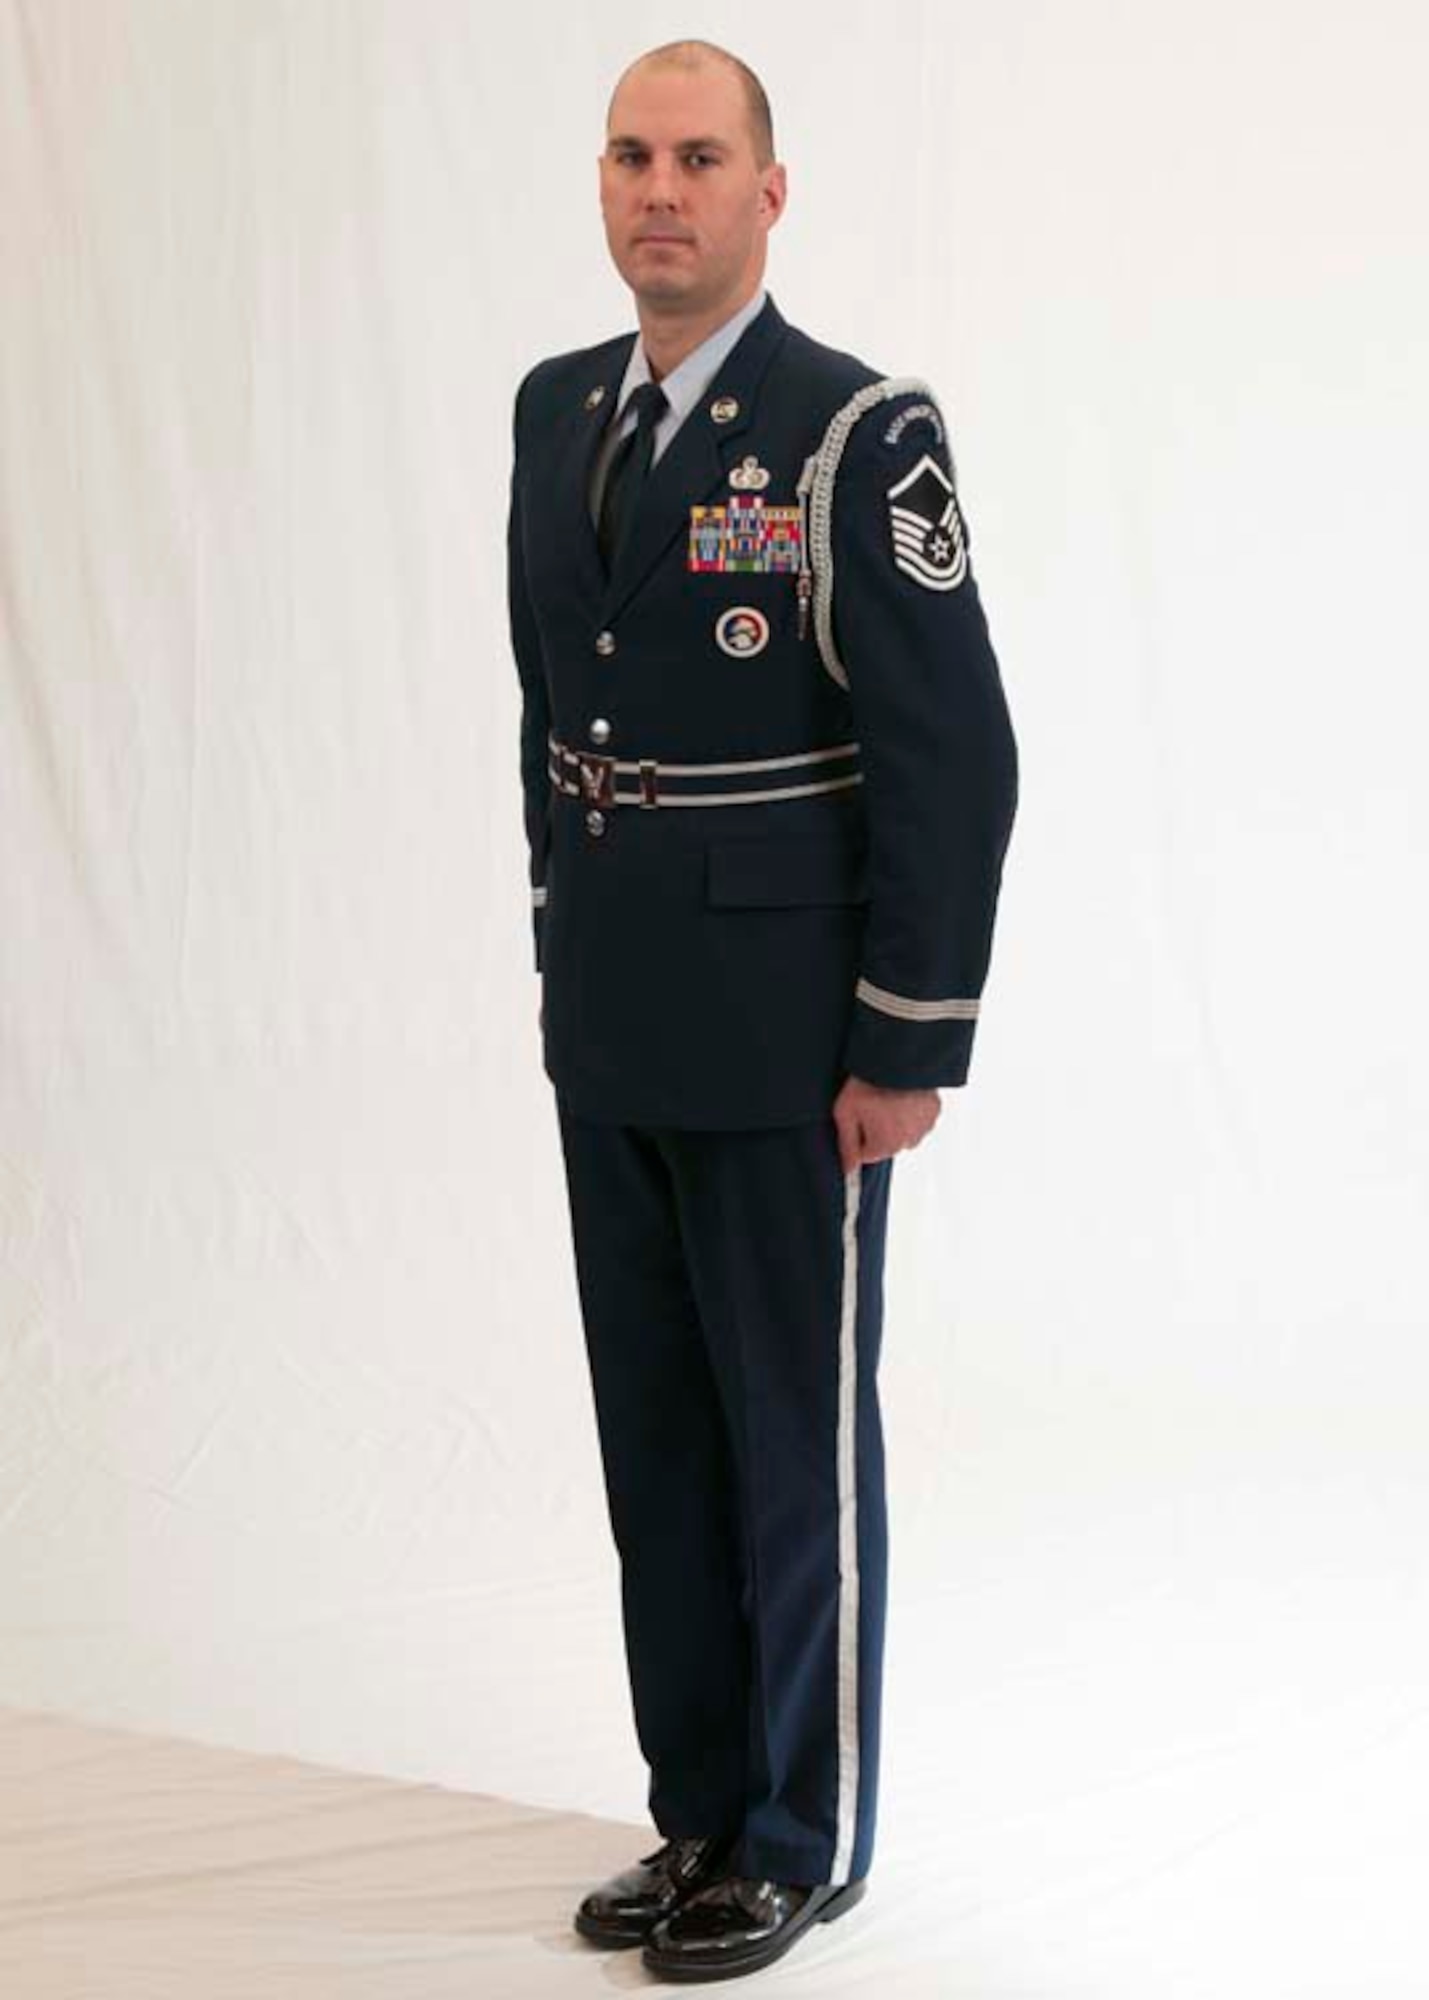 Master Sgt. Thomas Whiteman, Honor Guard Member of the Year